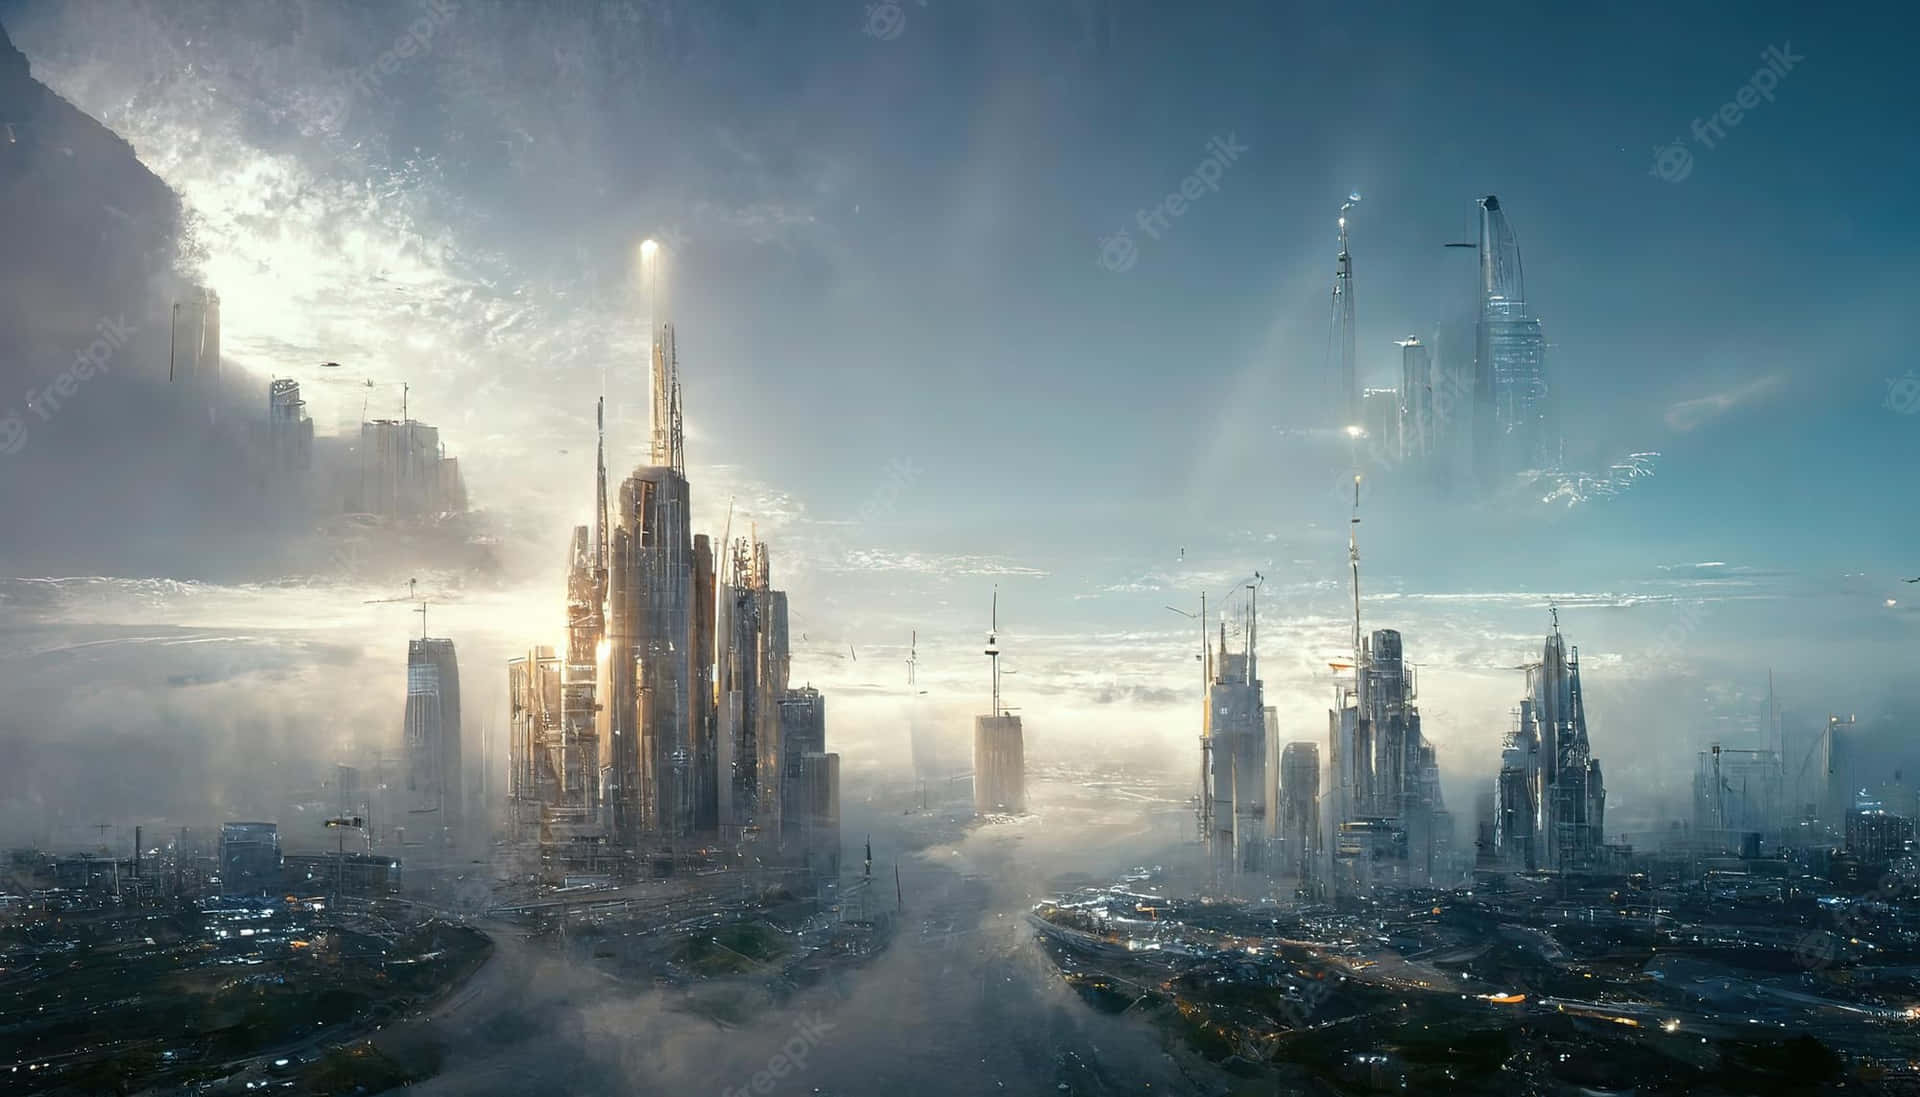 "Exploring the Skyscrapers of the Future" Wallpaper